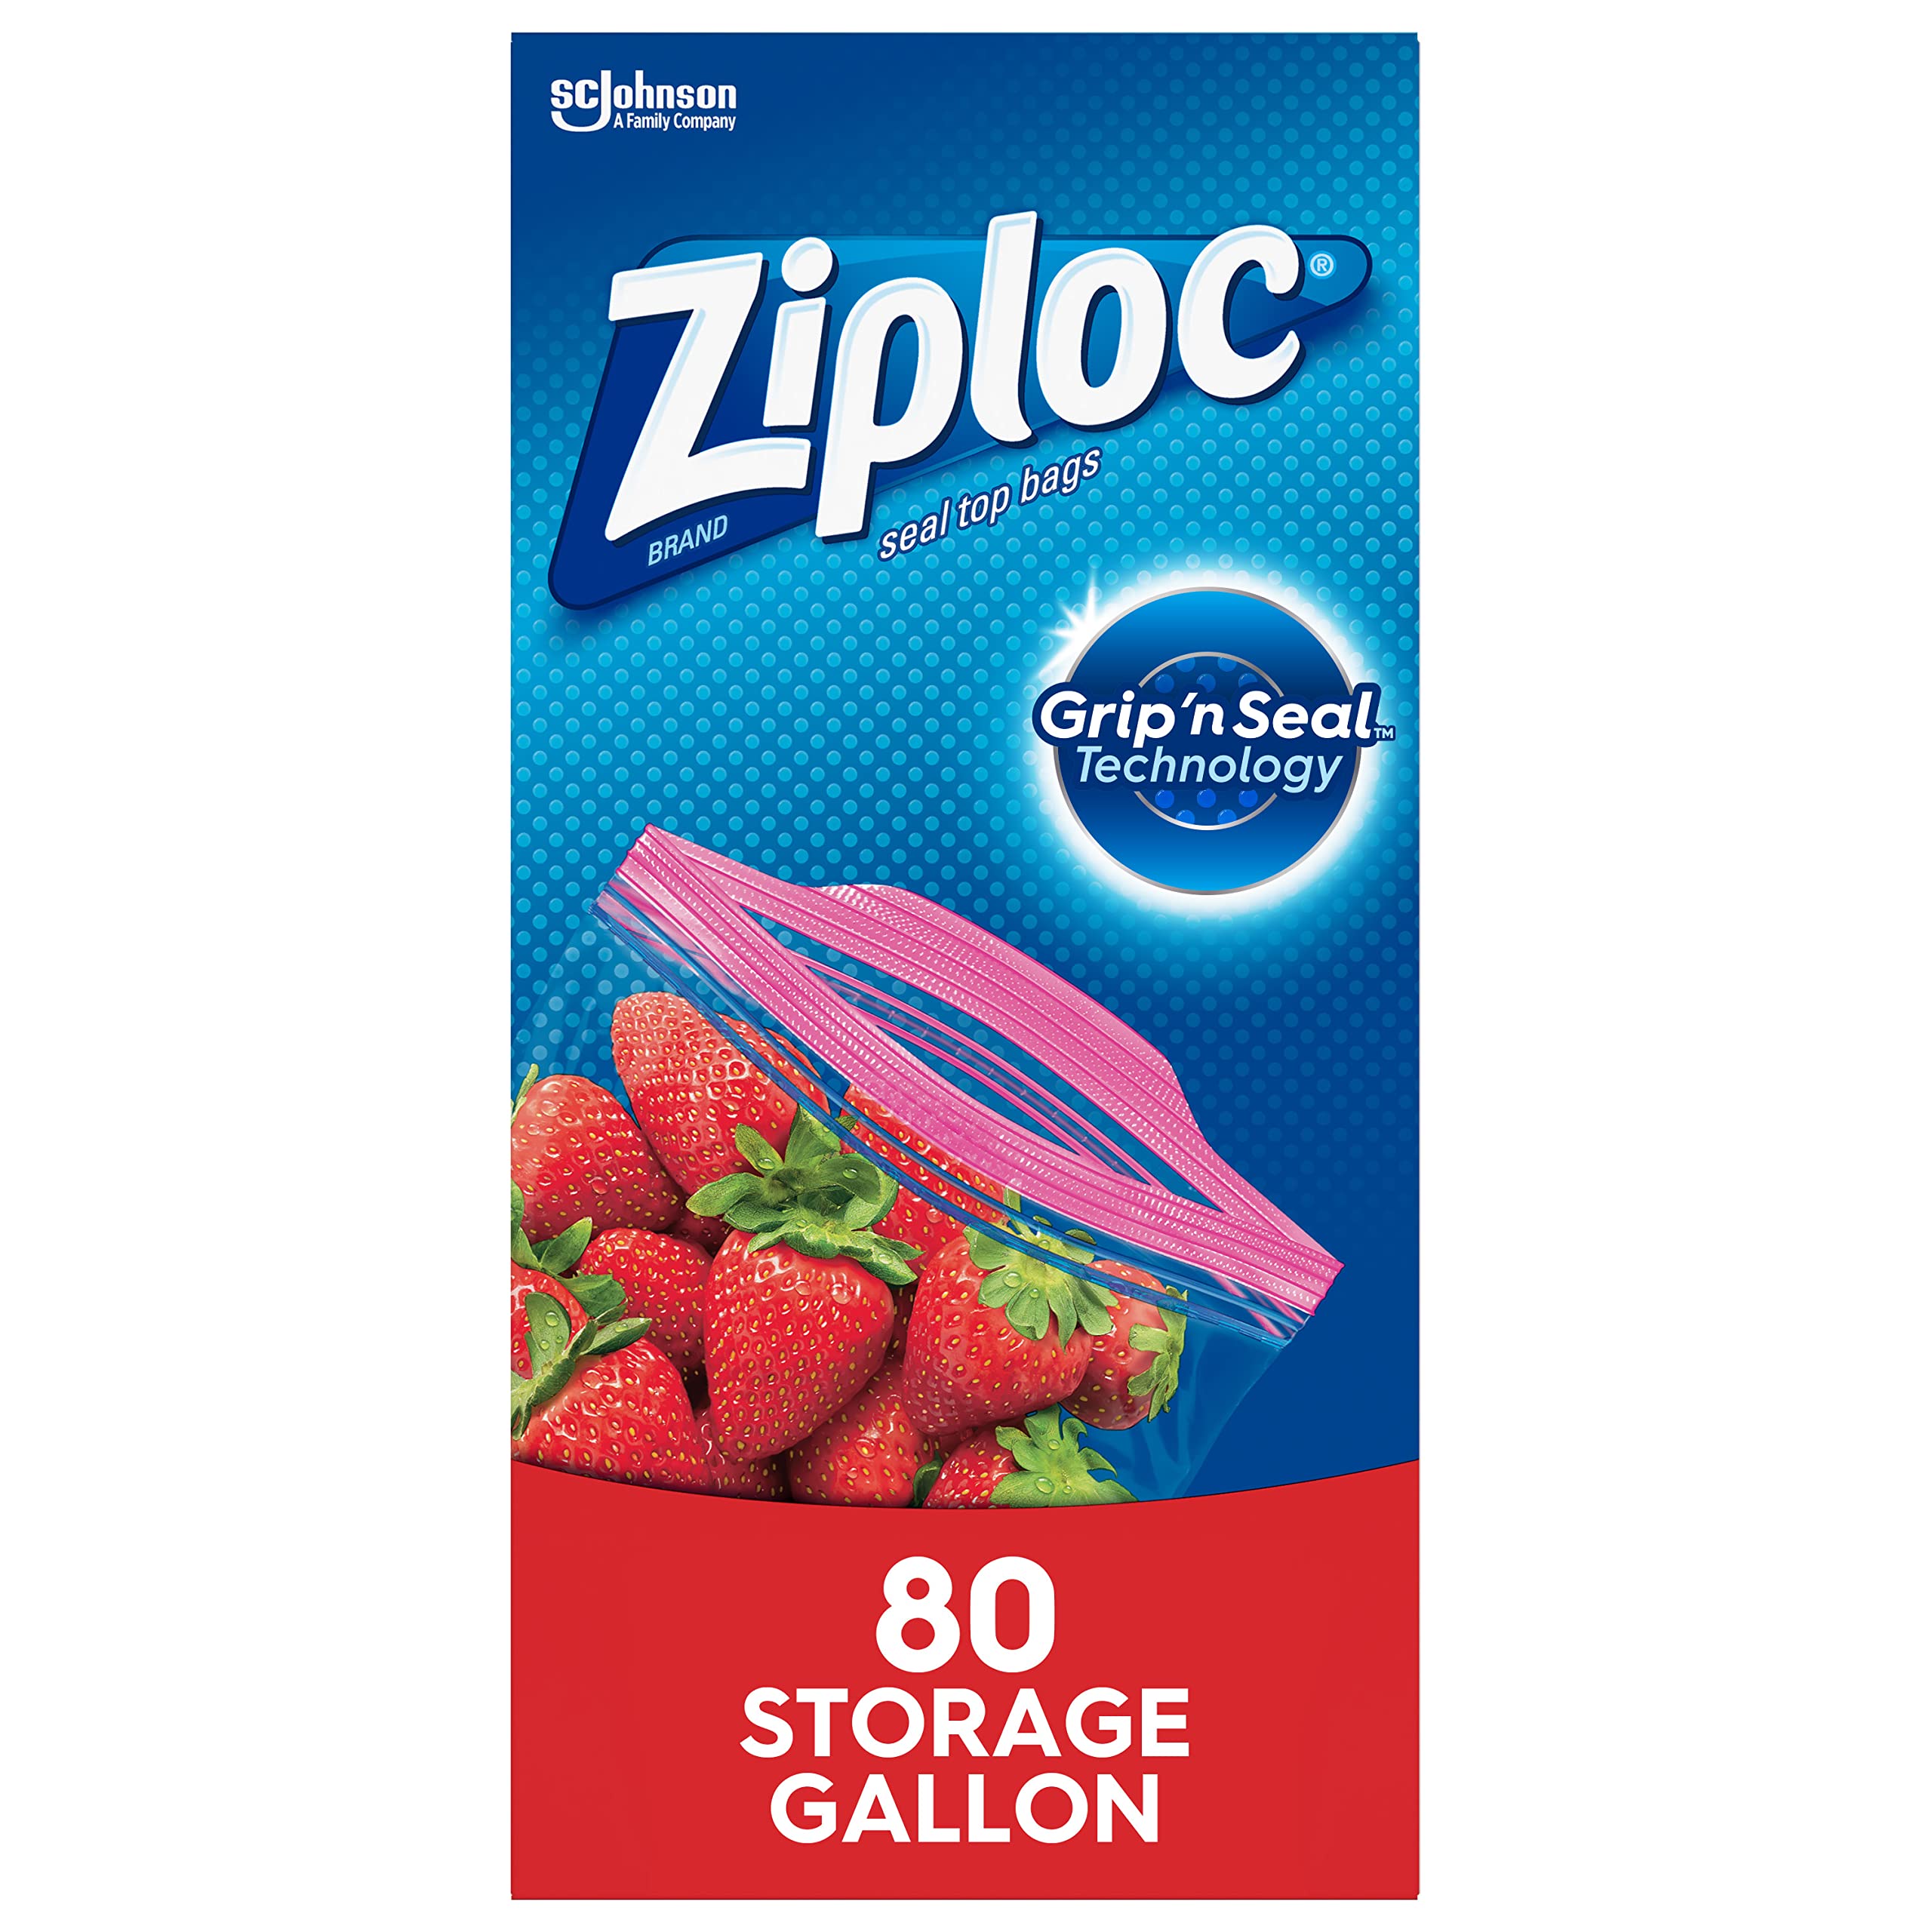 Storage Bags-Ziplock Gallon